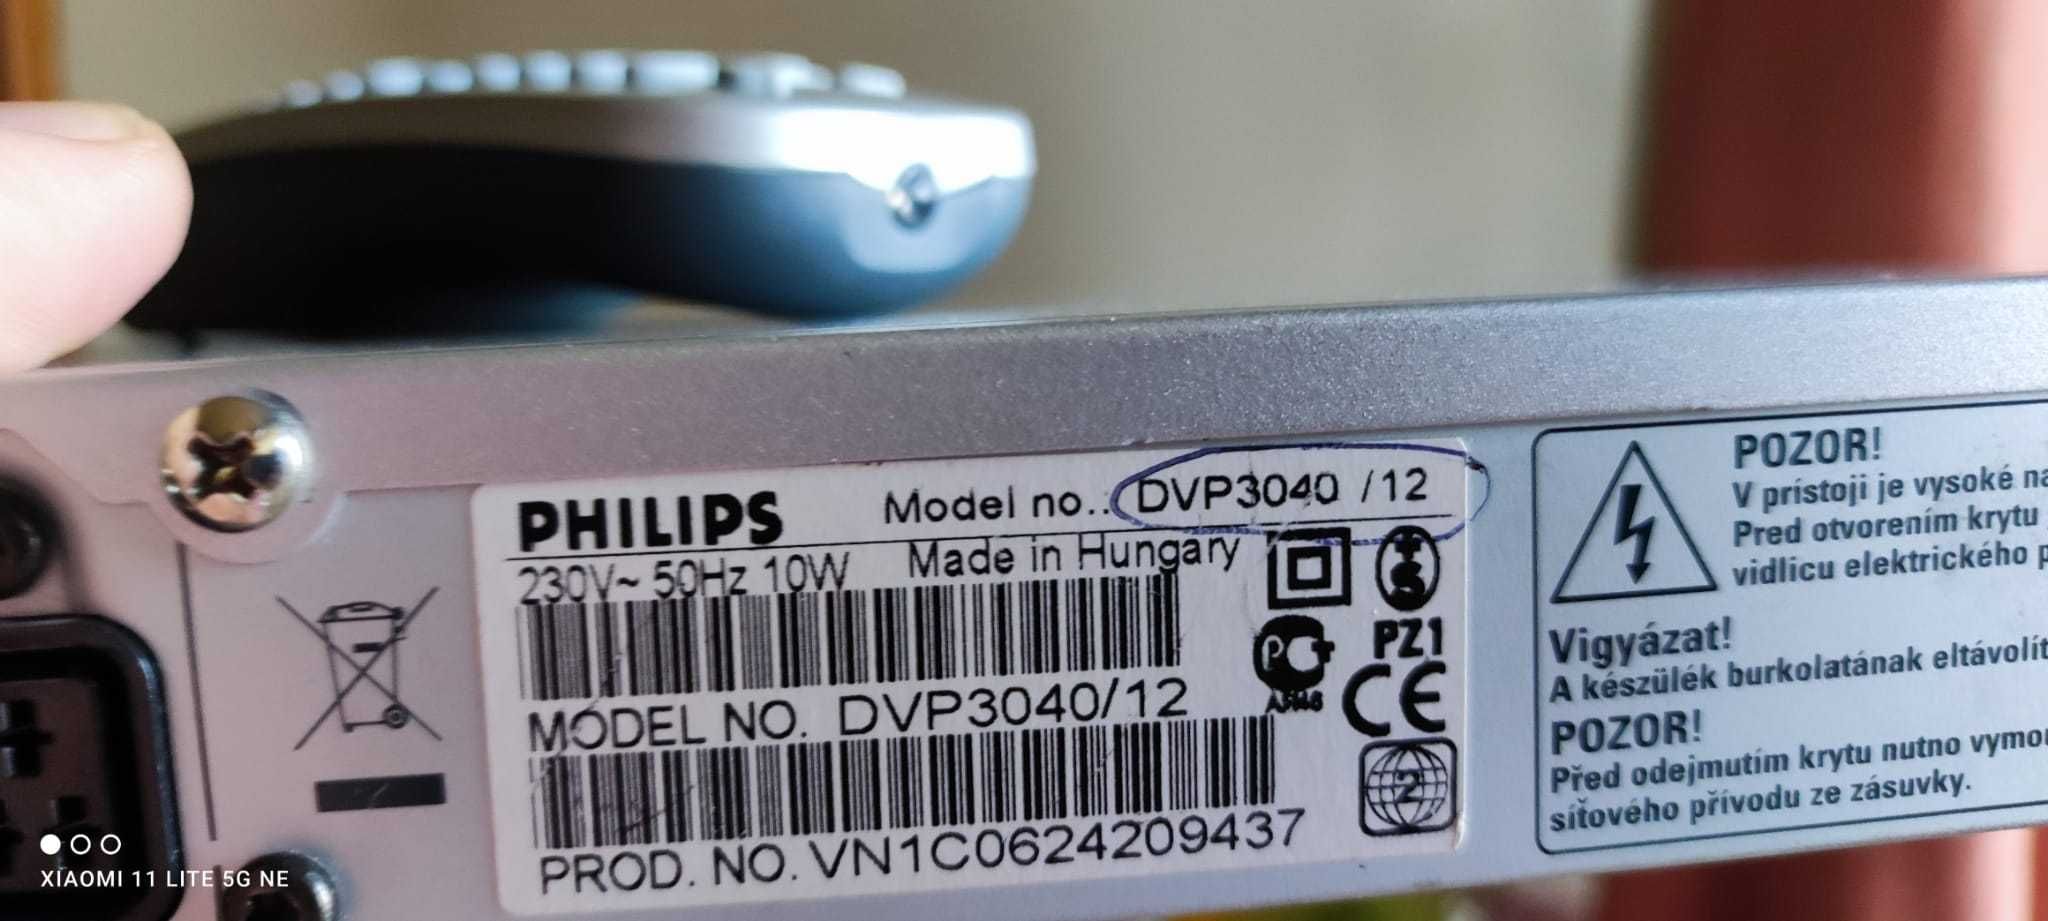 DVD player Philips DVP3040 / 12 + telecomanda